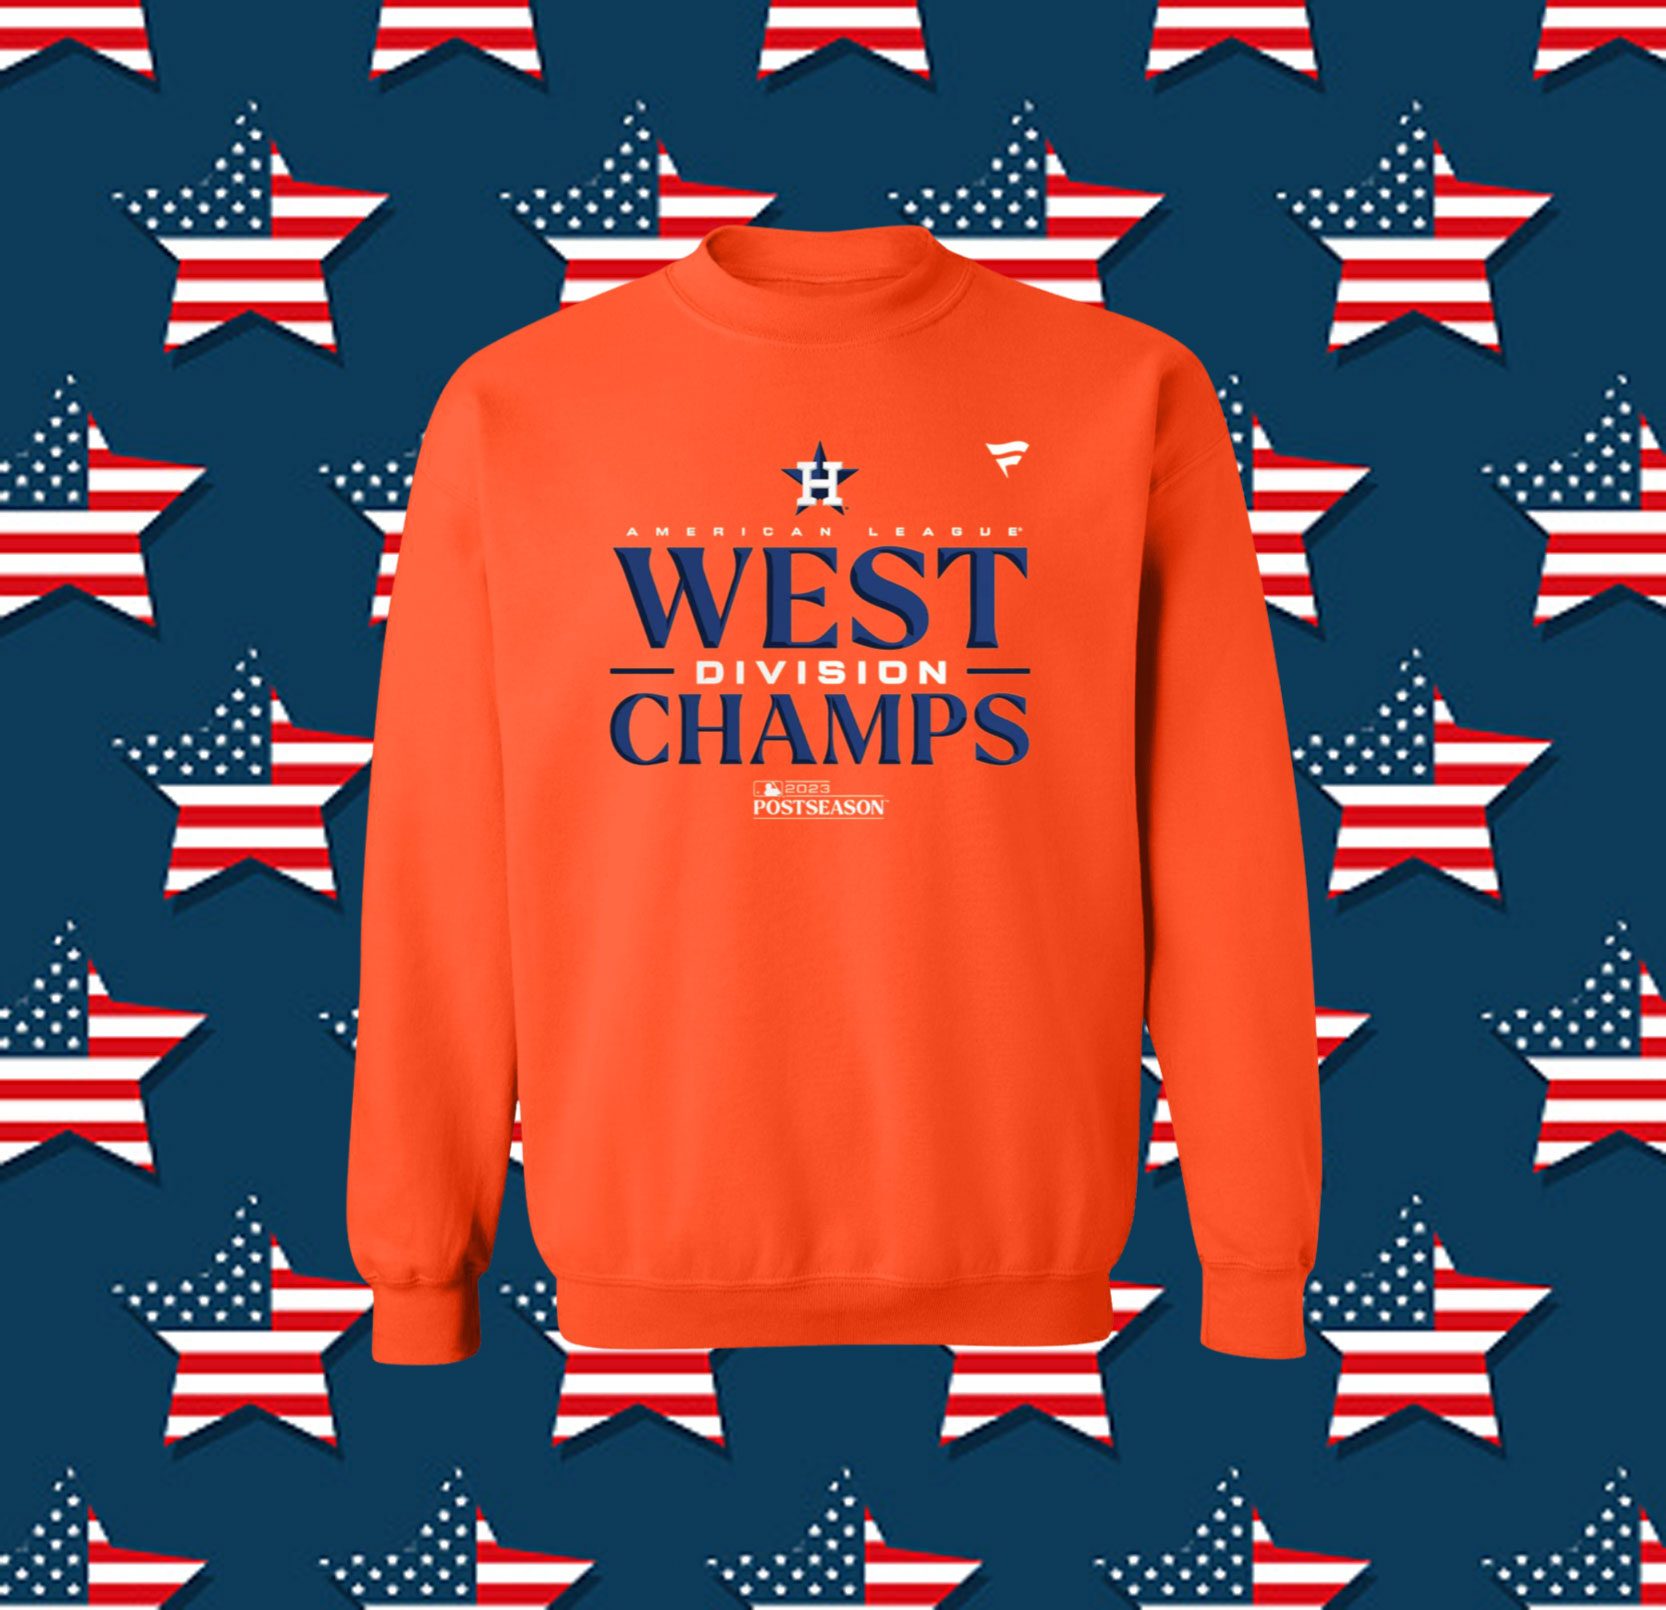 Official Astros Al West Champions 2023 Shirt - Teeducks